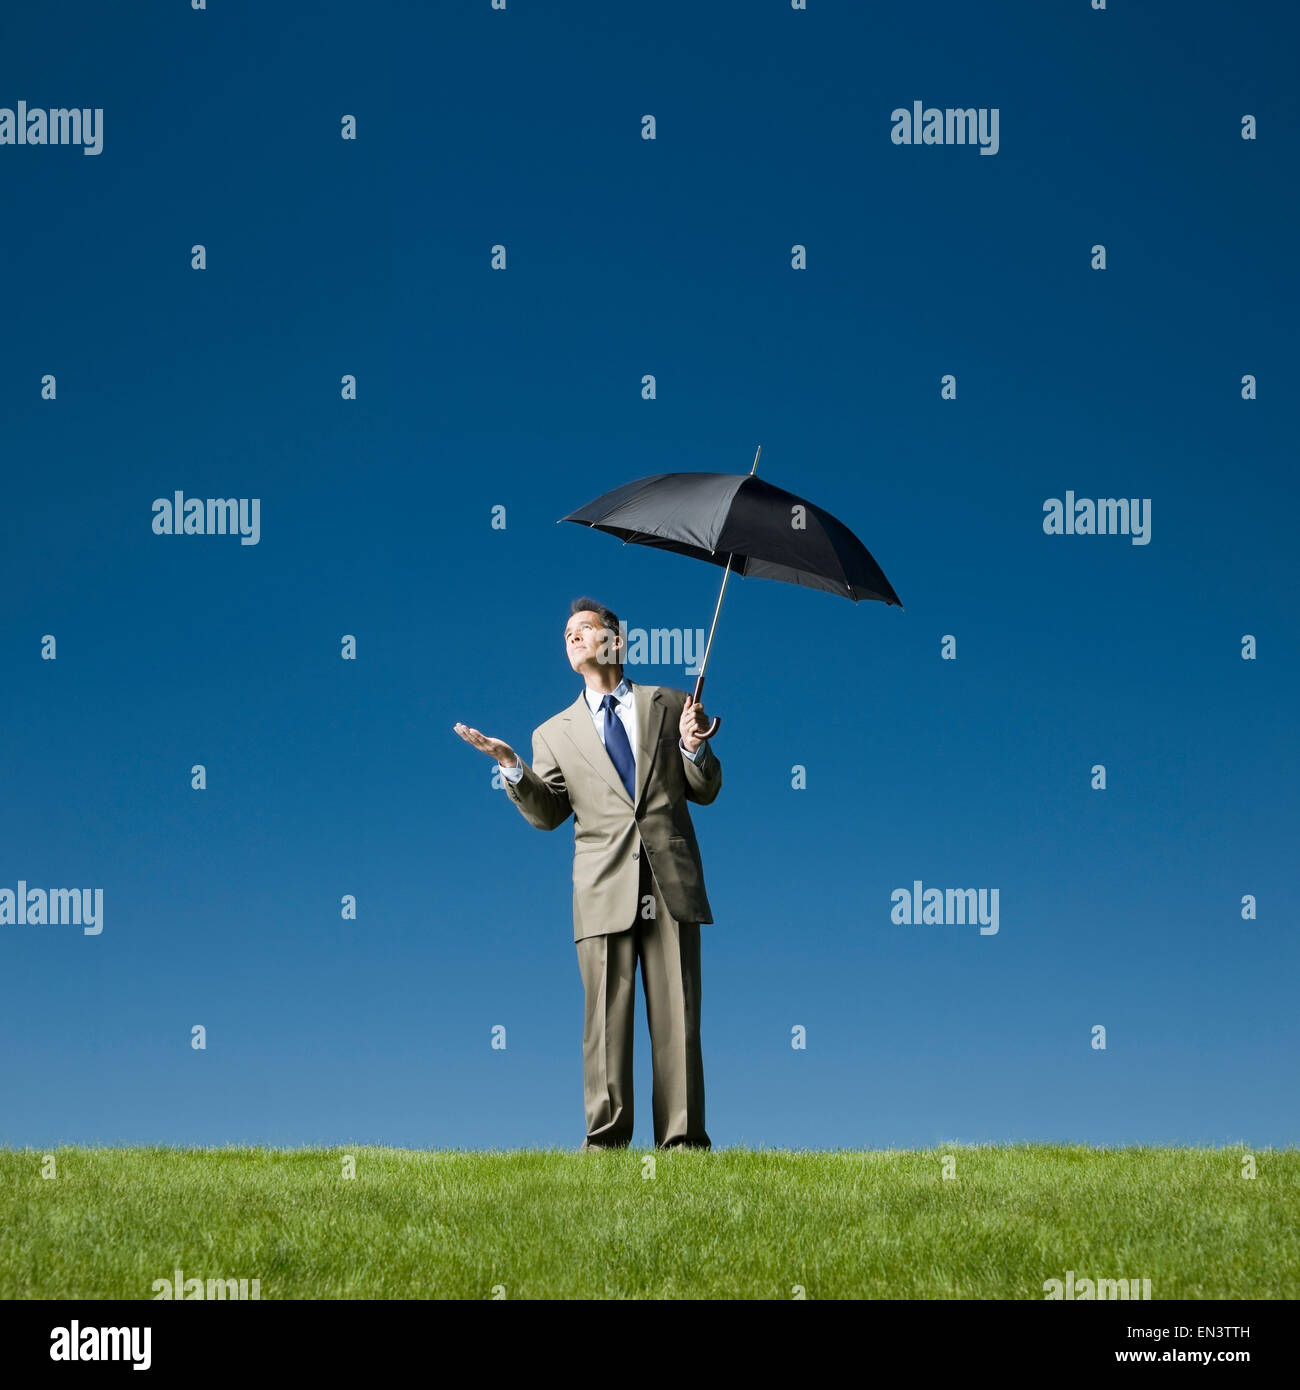 man holding an umbrella checking for rain Stock Photo